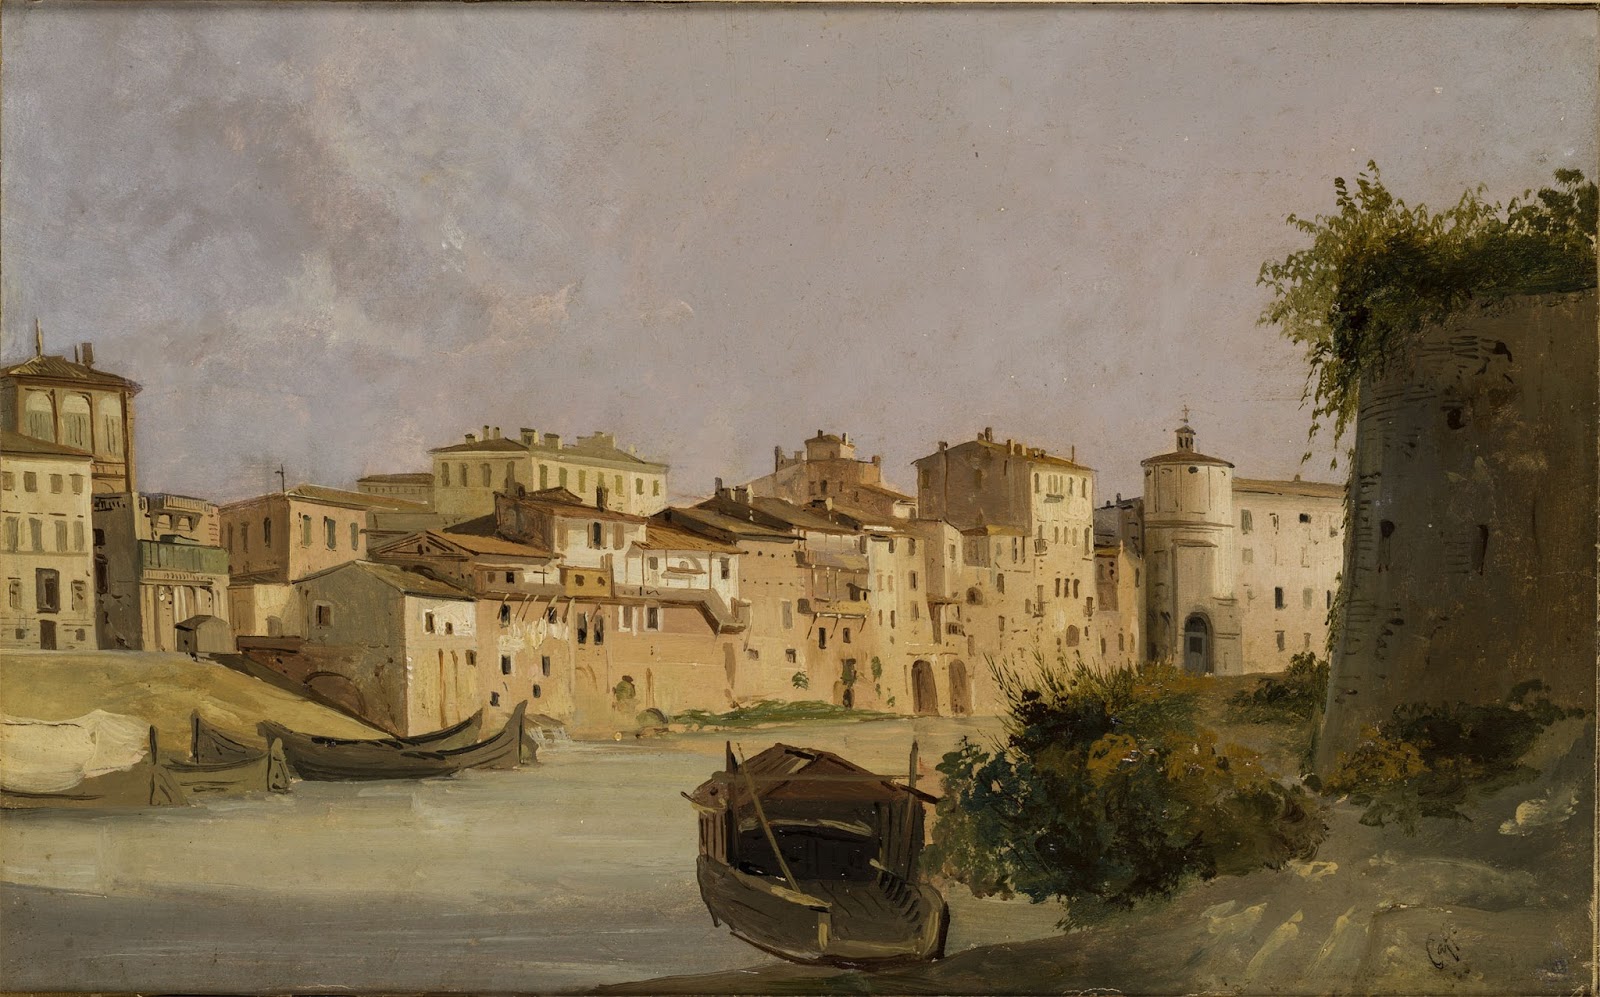 Ippolito+Caffi-1809-1866 (40).jpg